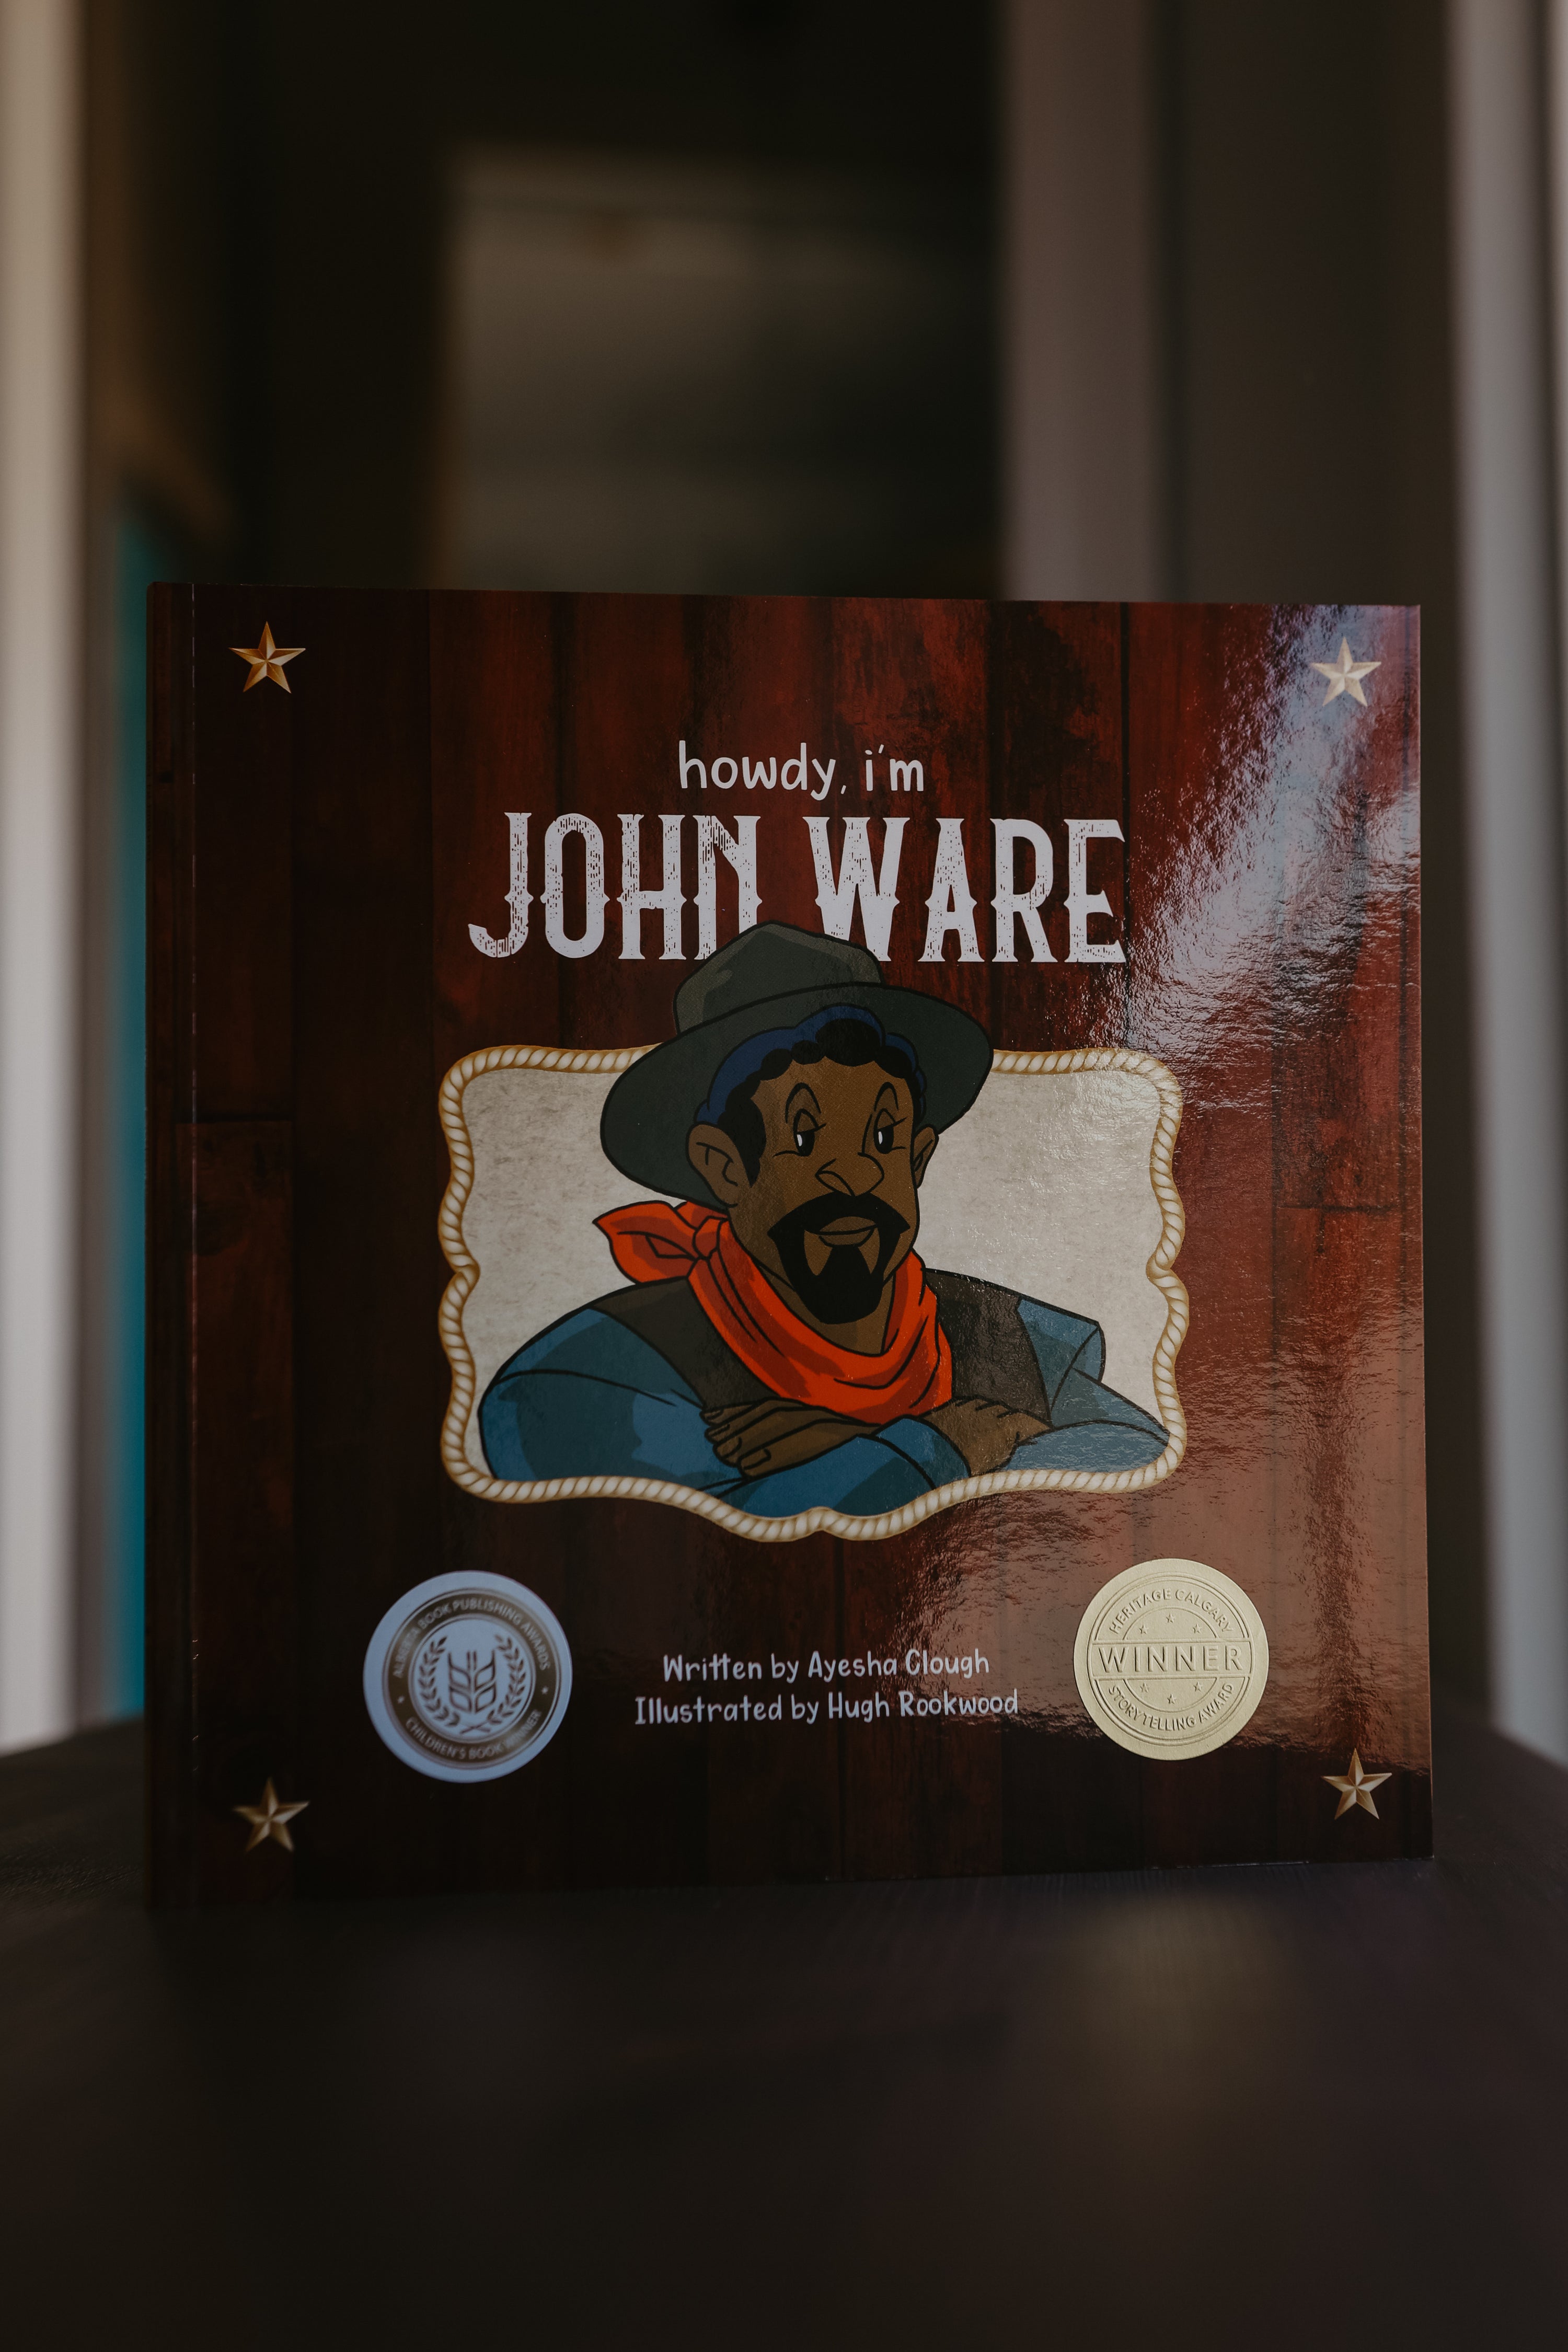 Children's Book - Howdy, I'm John Ware